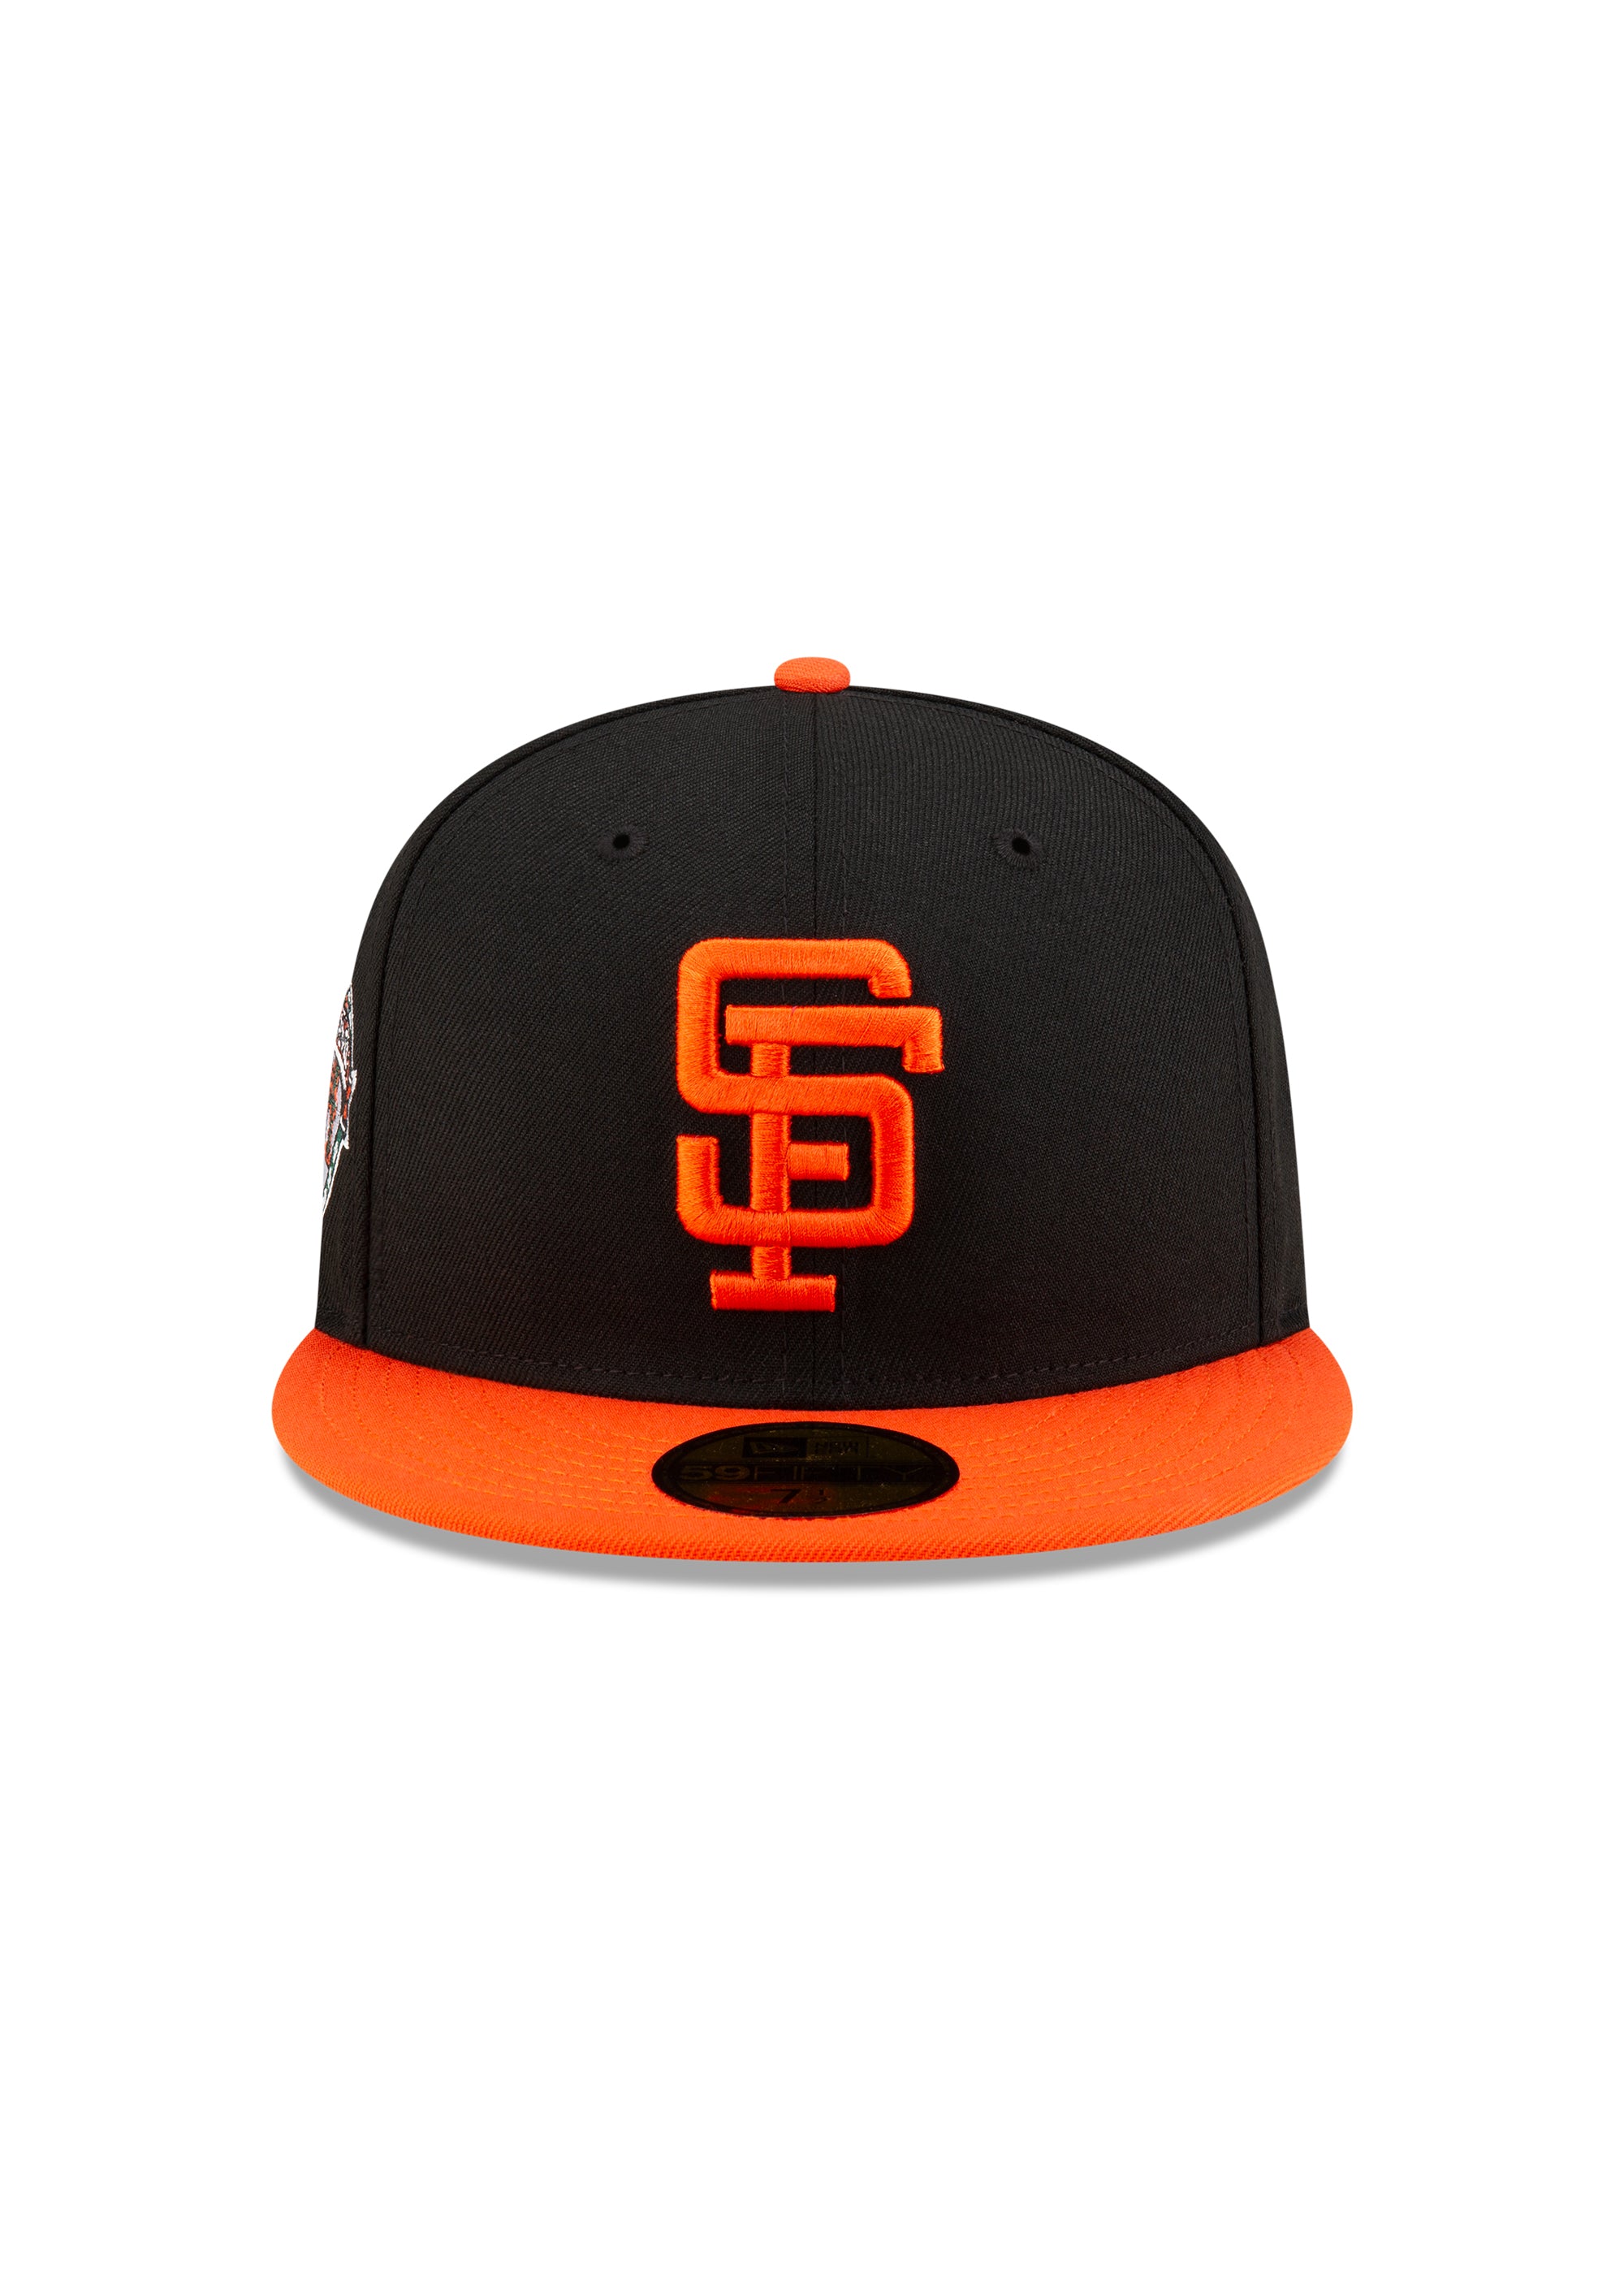 San Fransisco Giants - Black/Orange